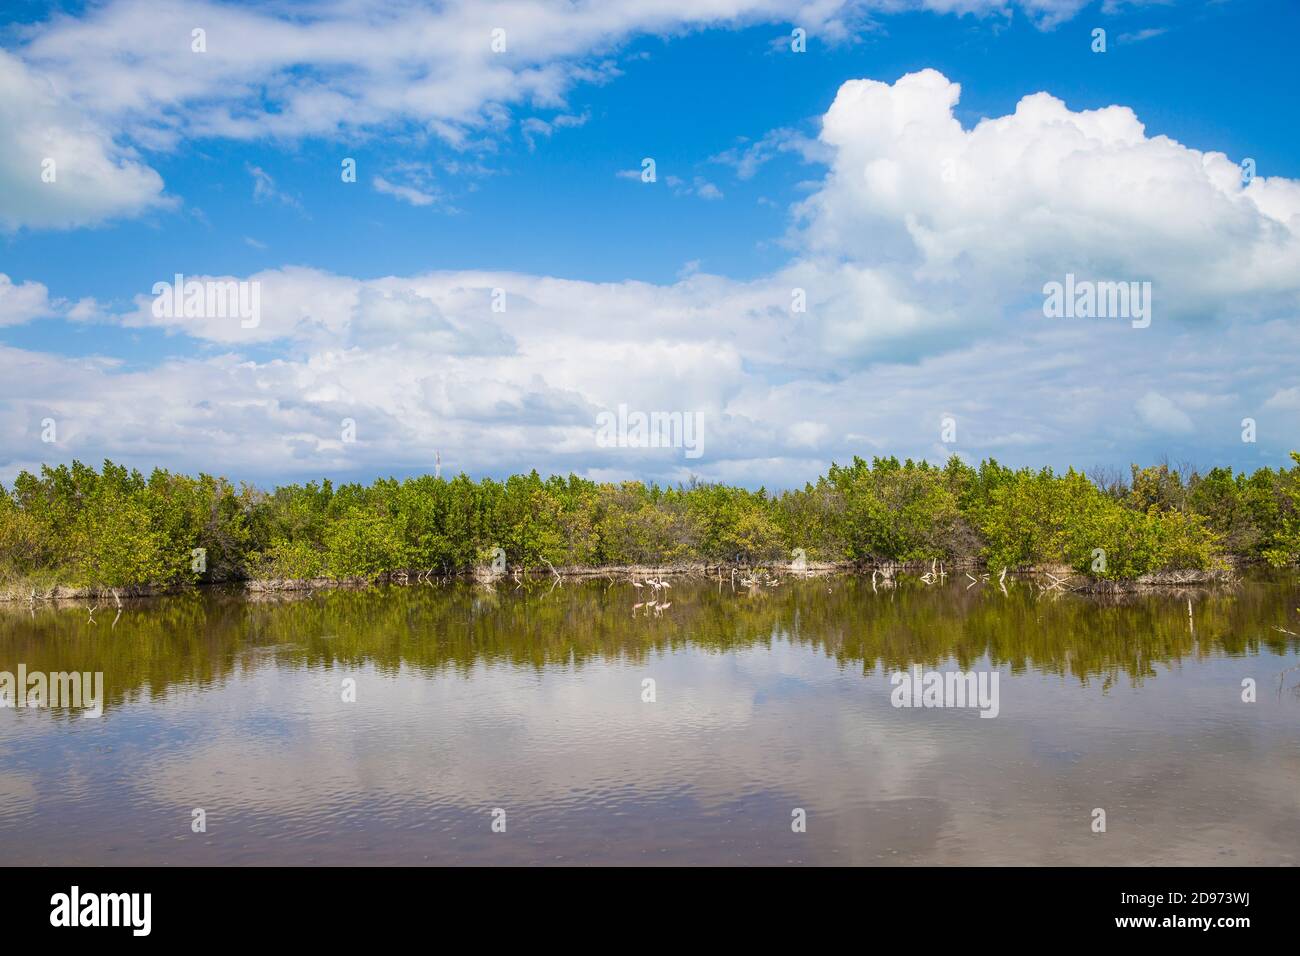 Cuba, Ciego de Avila Province, Jardines del Rey, Cayo Guillermo, Mangrove swamps Stock Photo